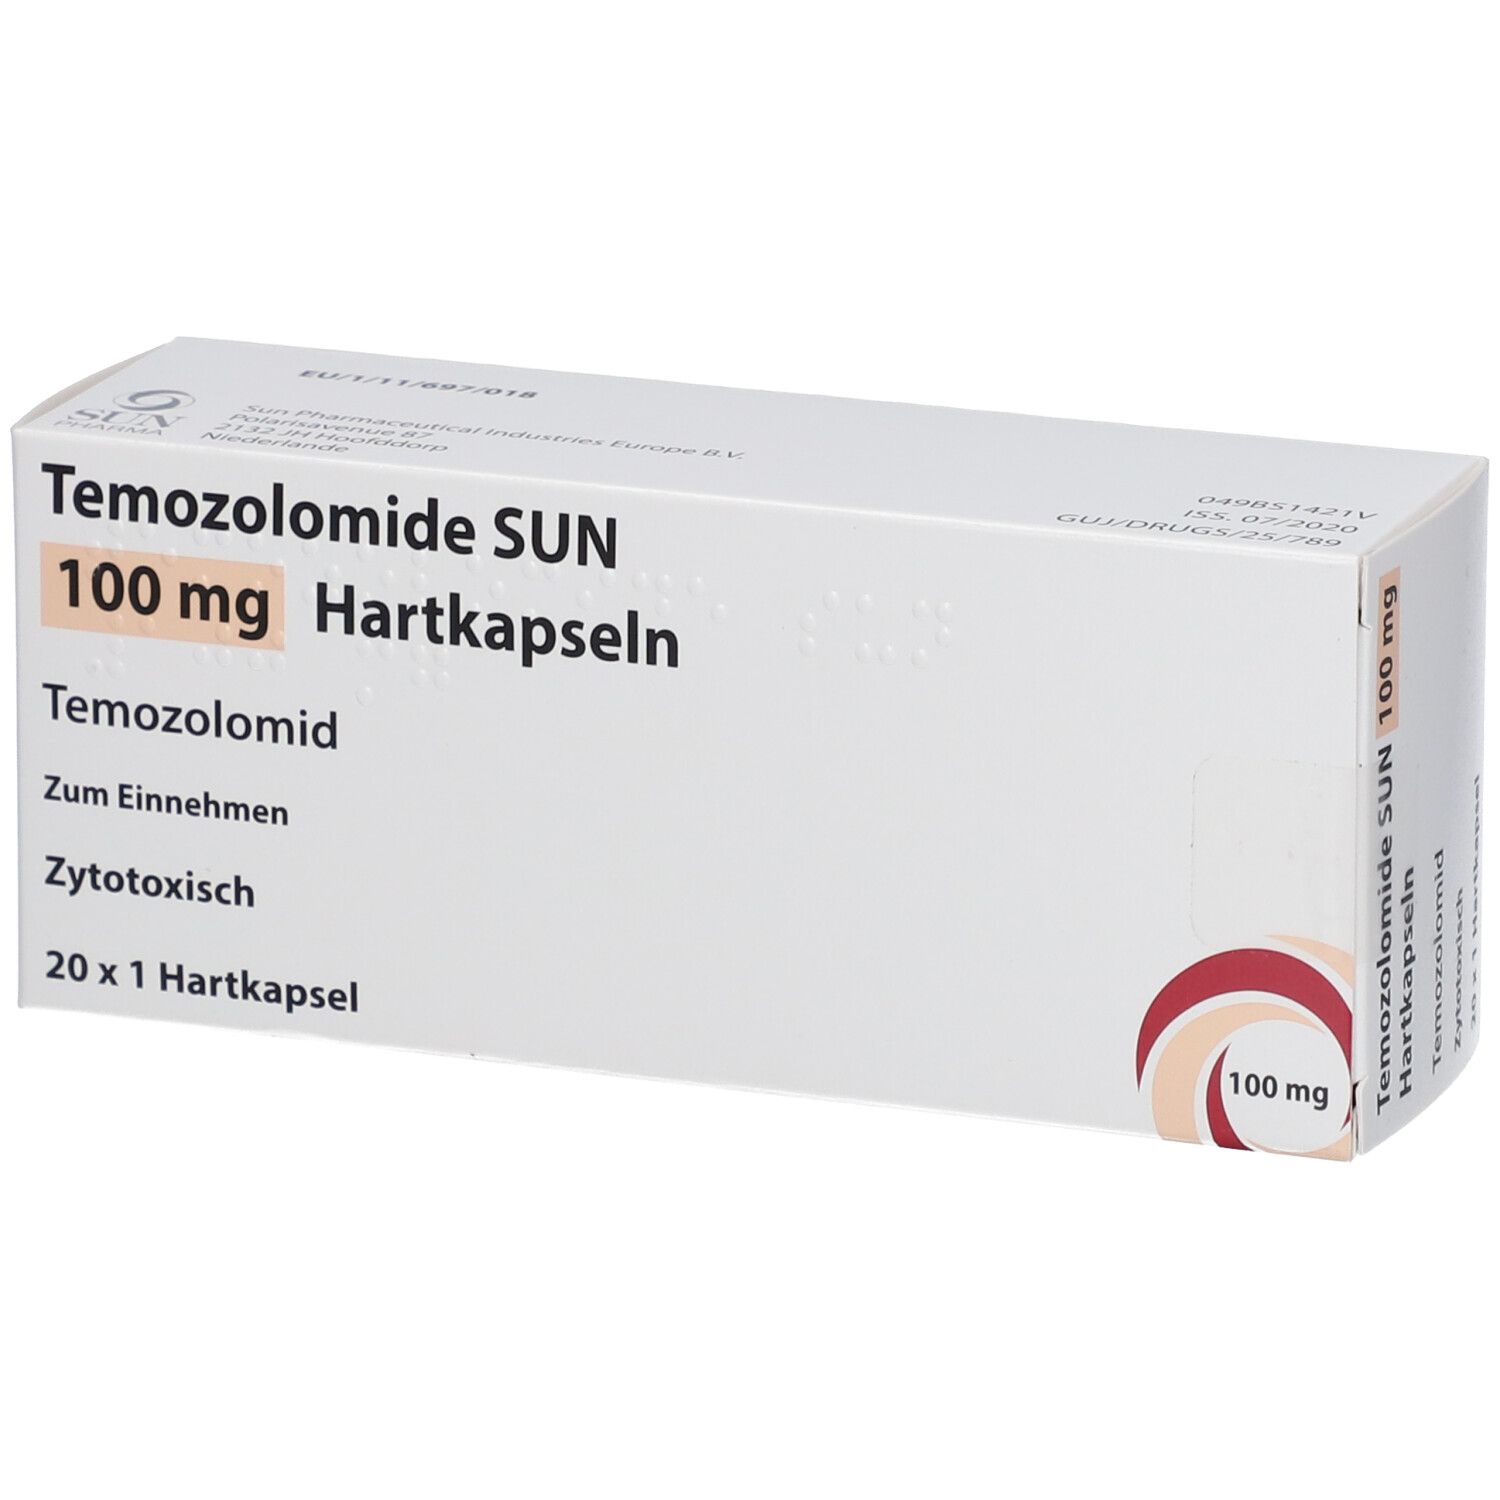 Temozolomide SUN 100 mg